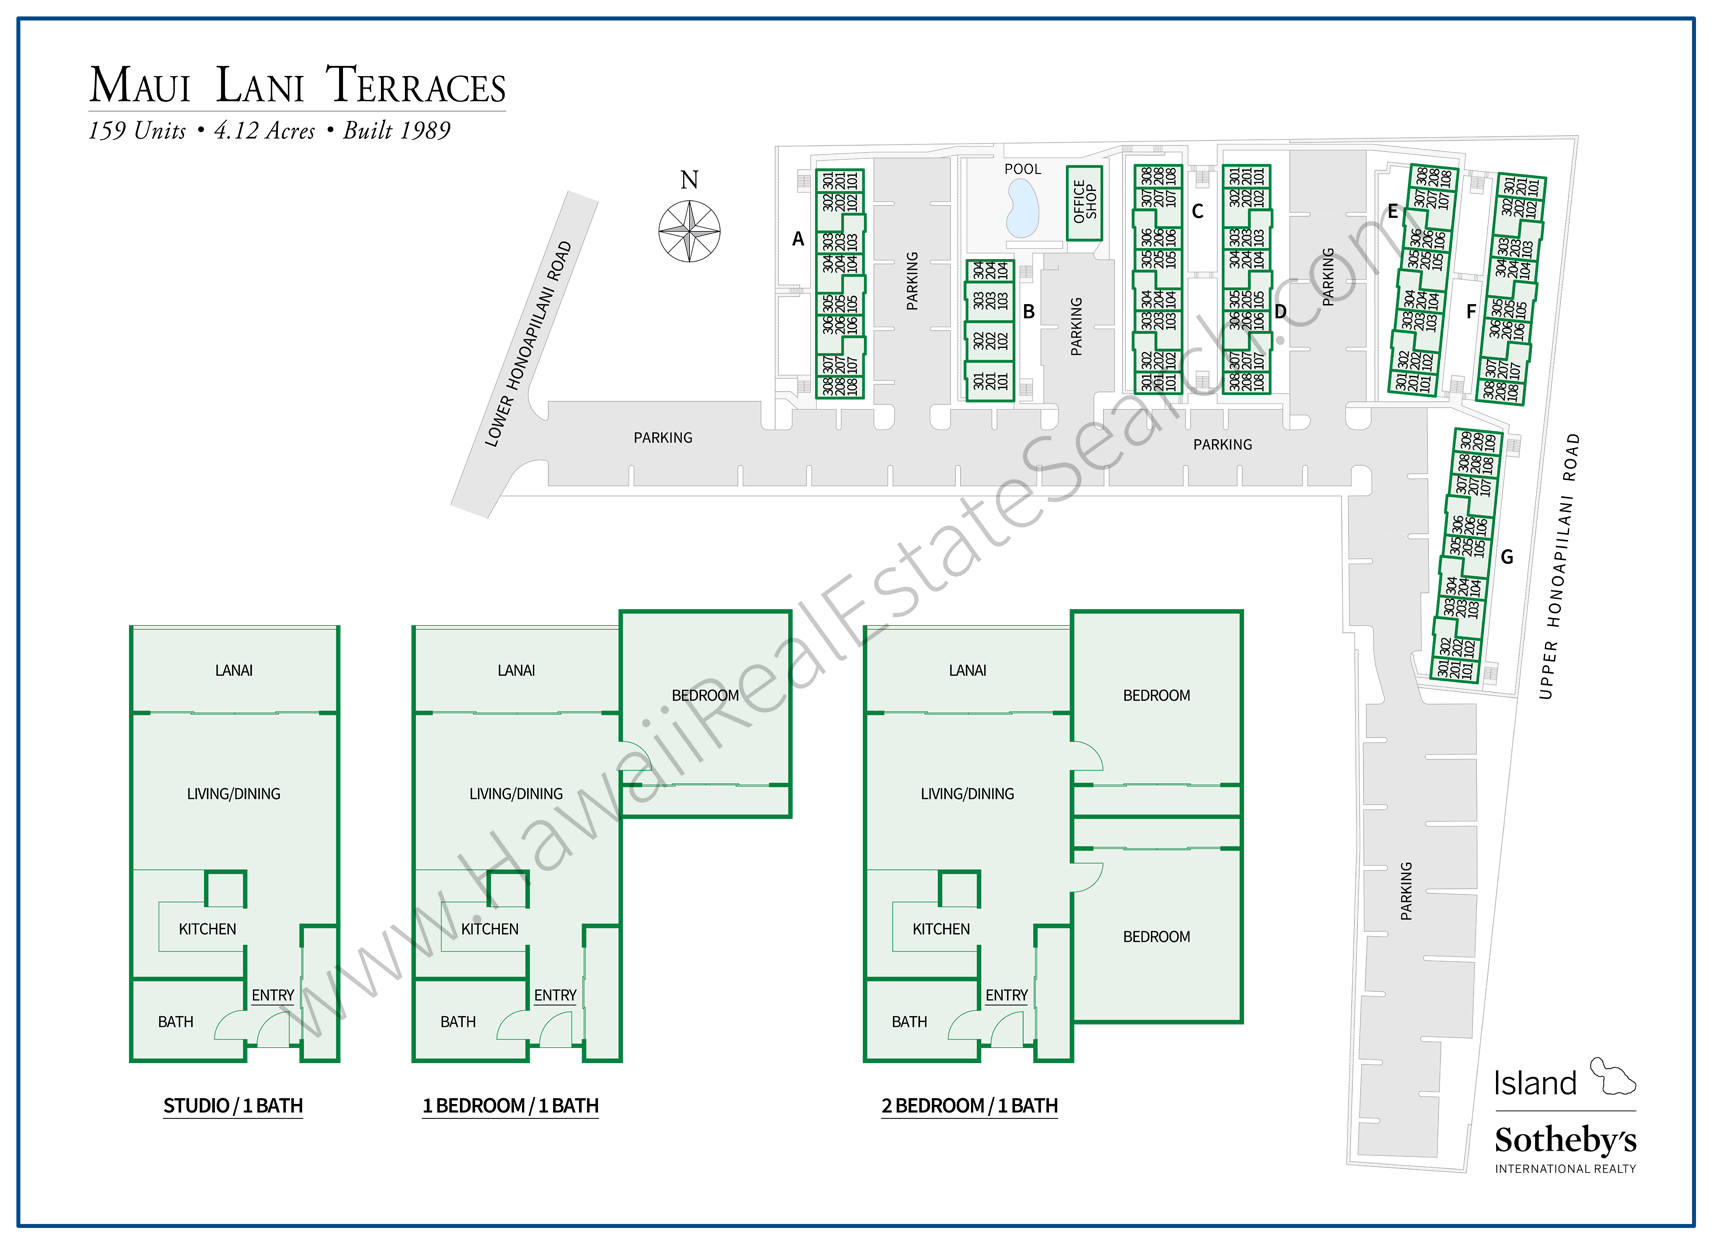 maui lani terraces map and floor plans